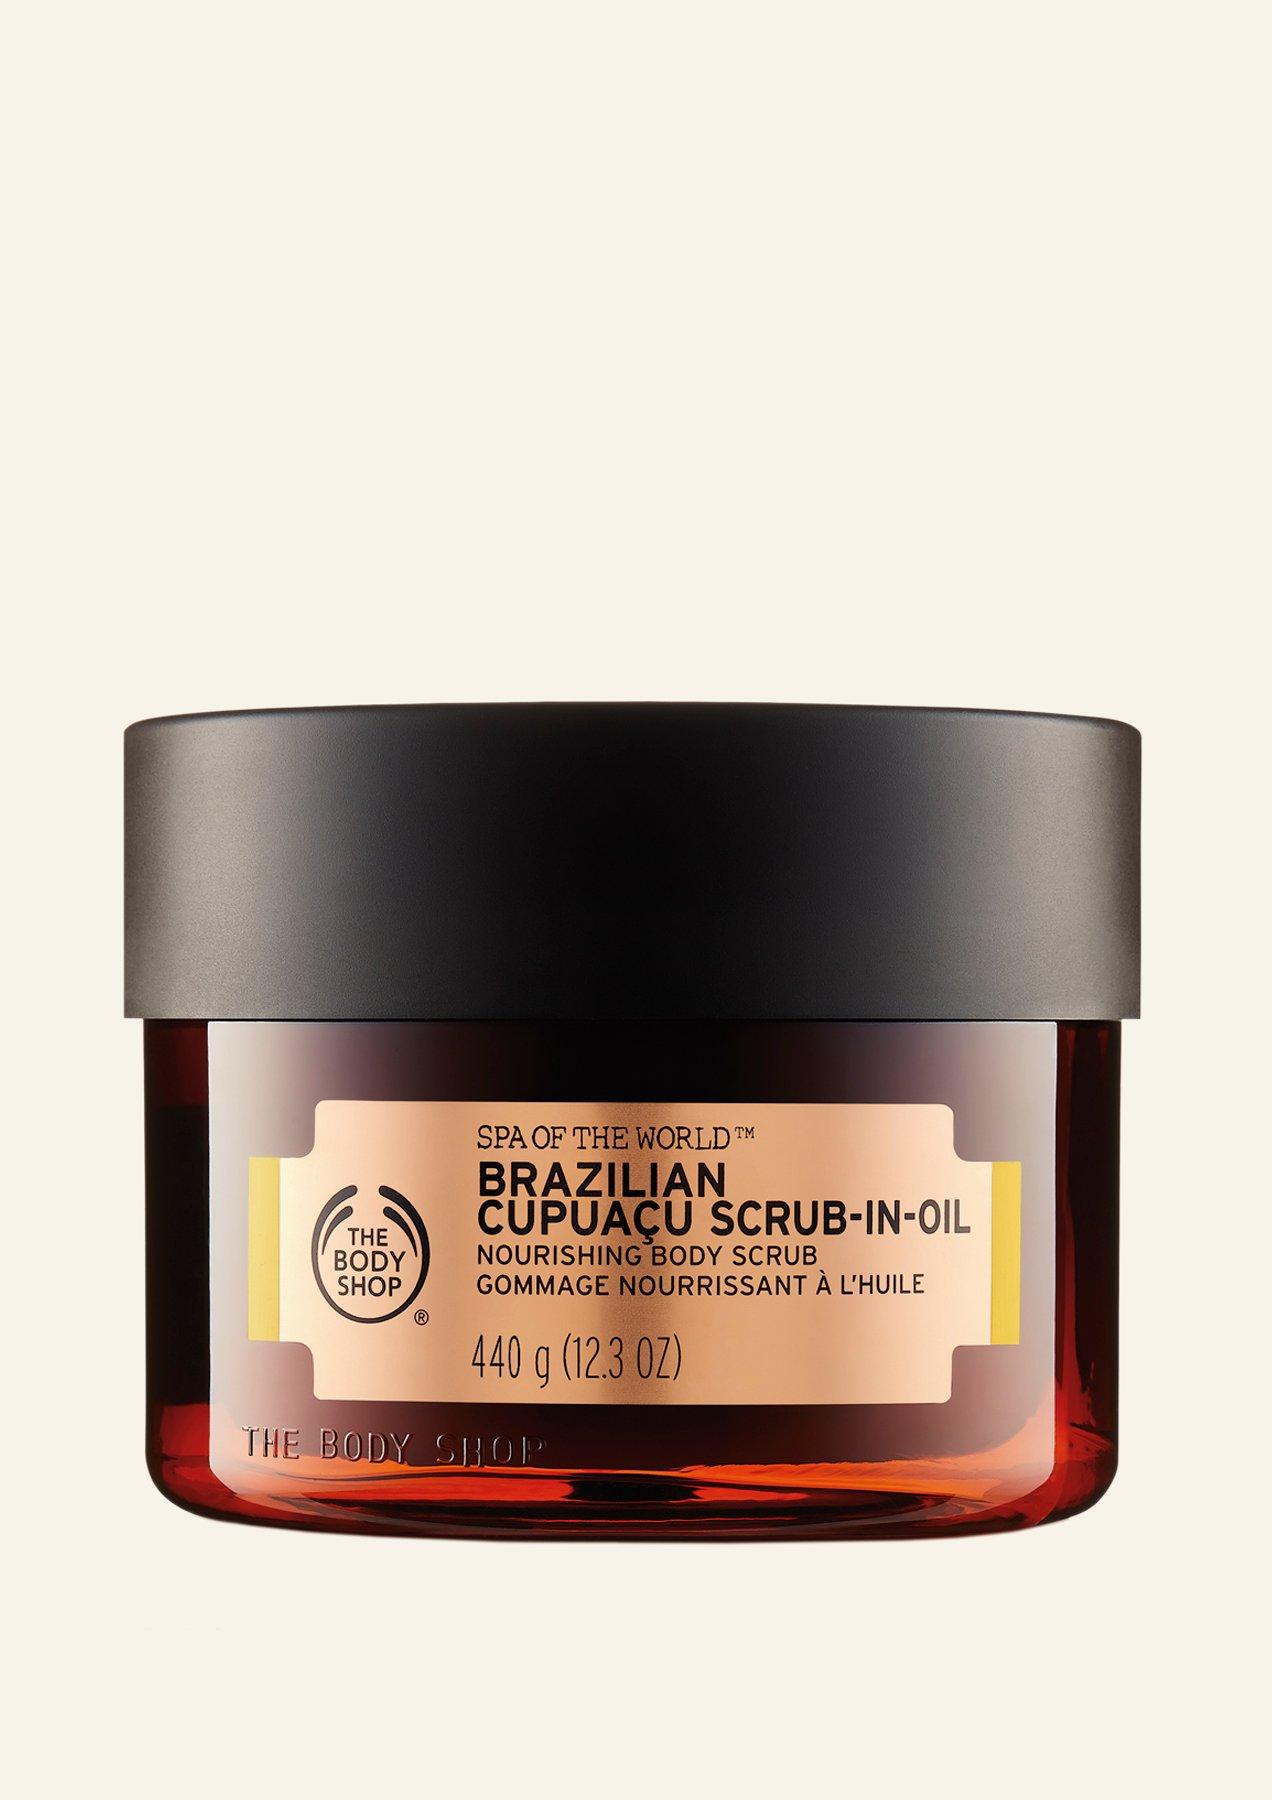 Over instelling Tien jaar eeuw Brazilian Cupuaçu Exfoliating Scrub-in-Oil | The Body Shop®